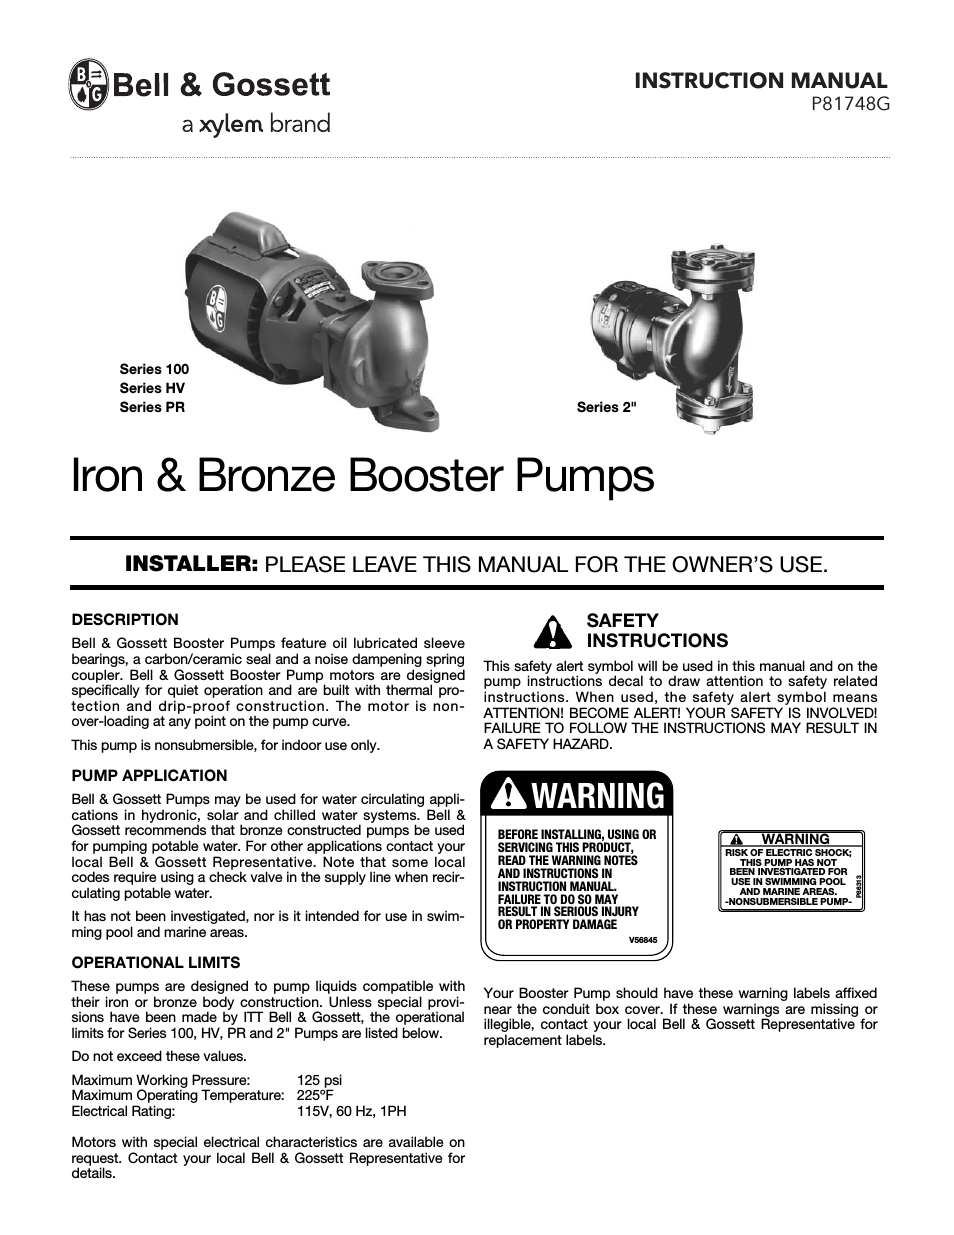 Iron & Bronze Booster Pumps Series 100